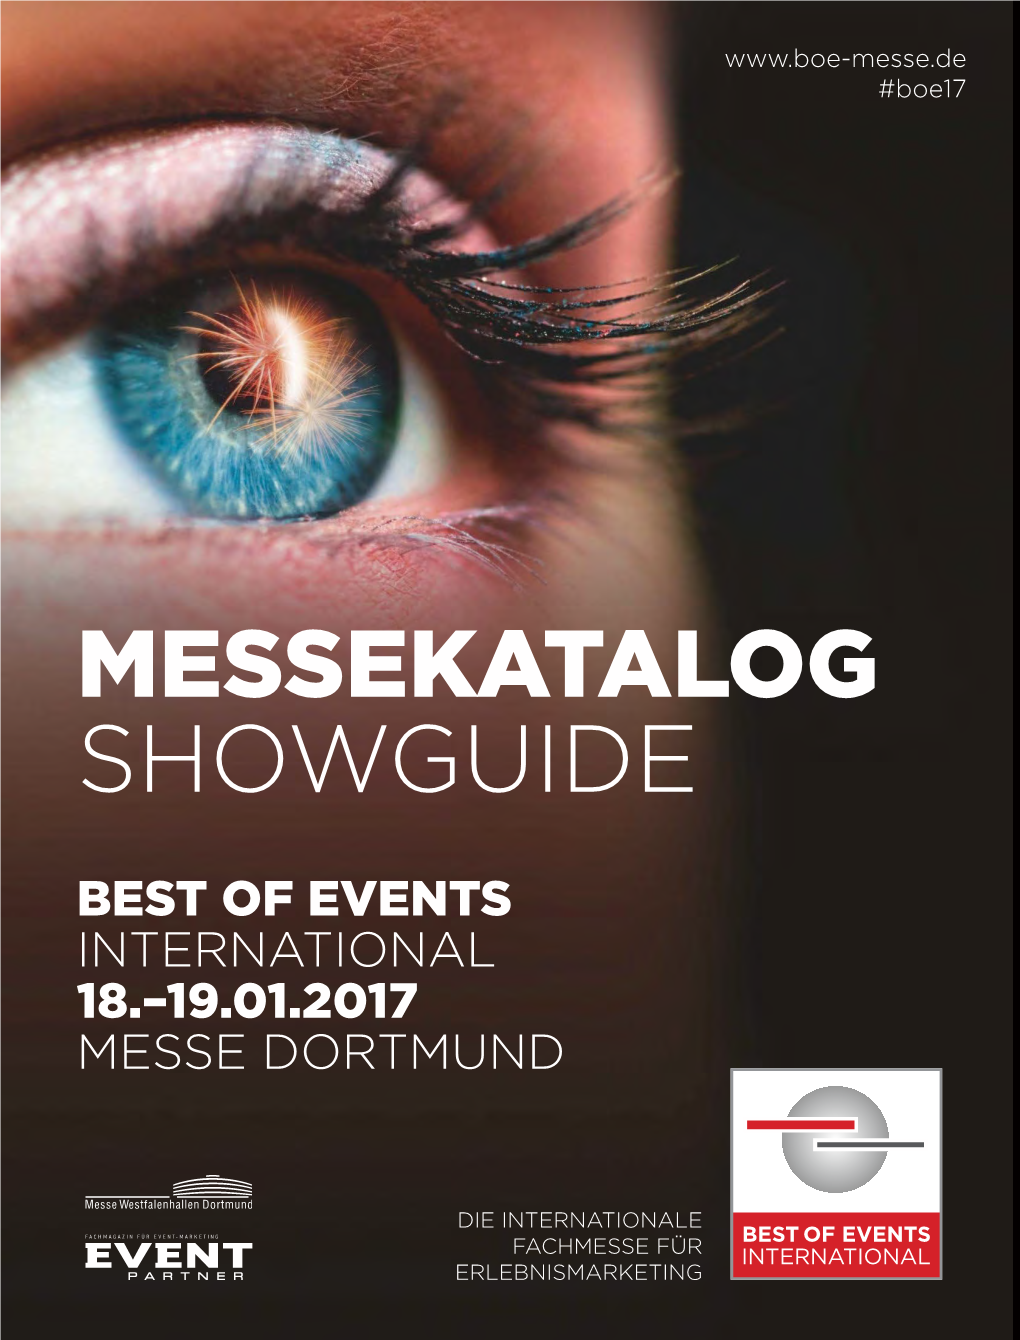 Best of Events International 18.–19.01.2017 Messe Dortmund